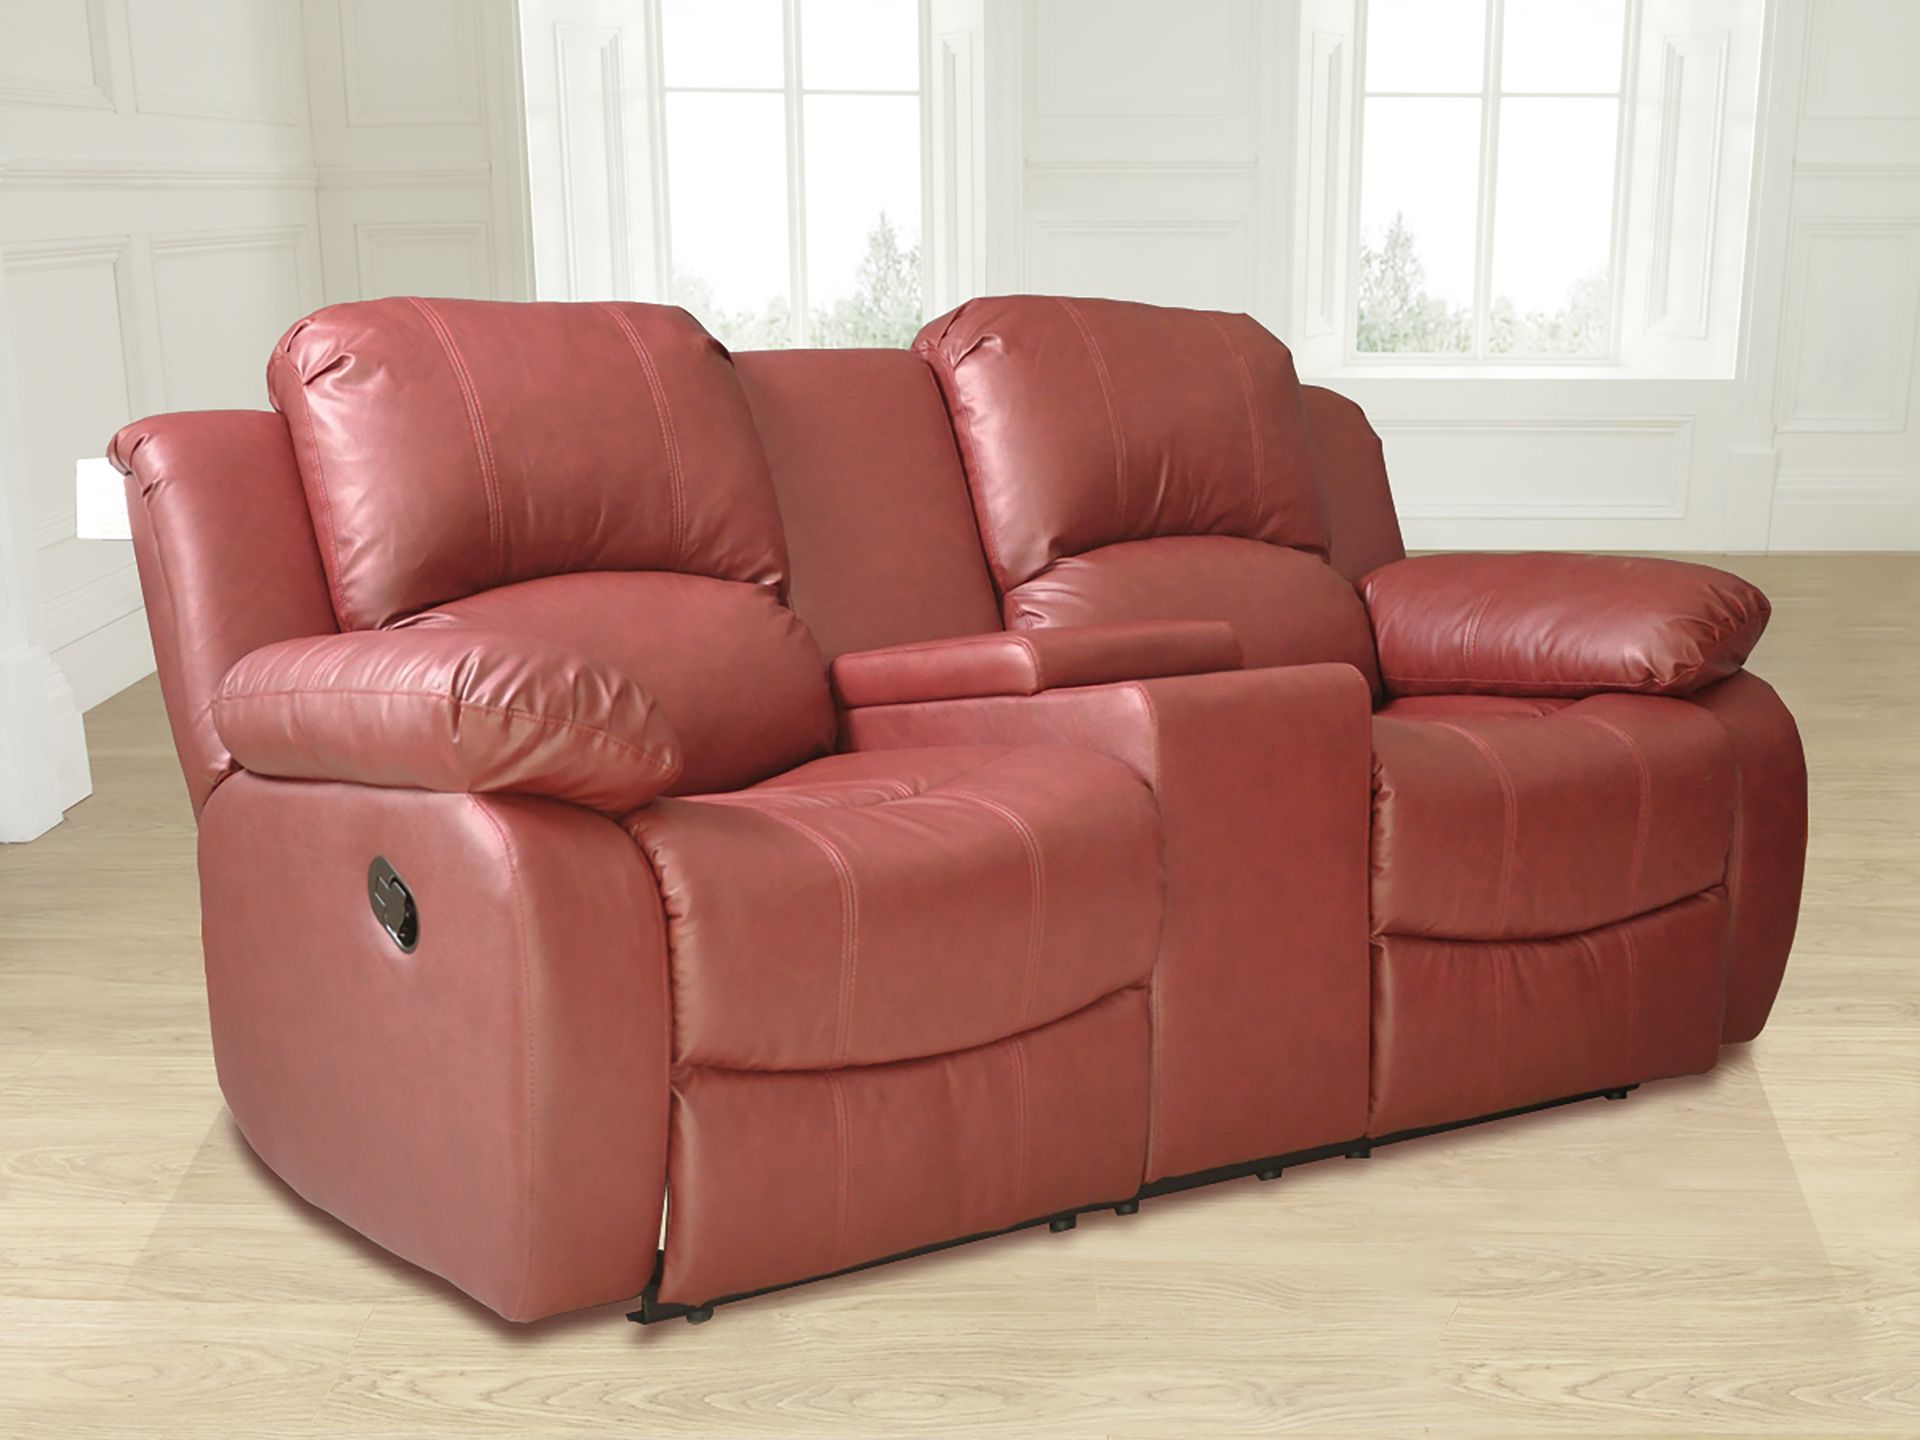 Supreme Valance burgandy leather 3 seater reclining sofa